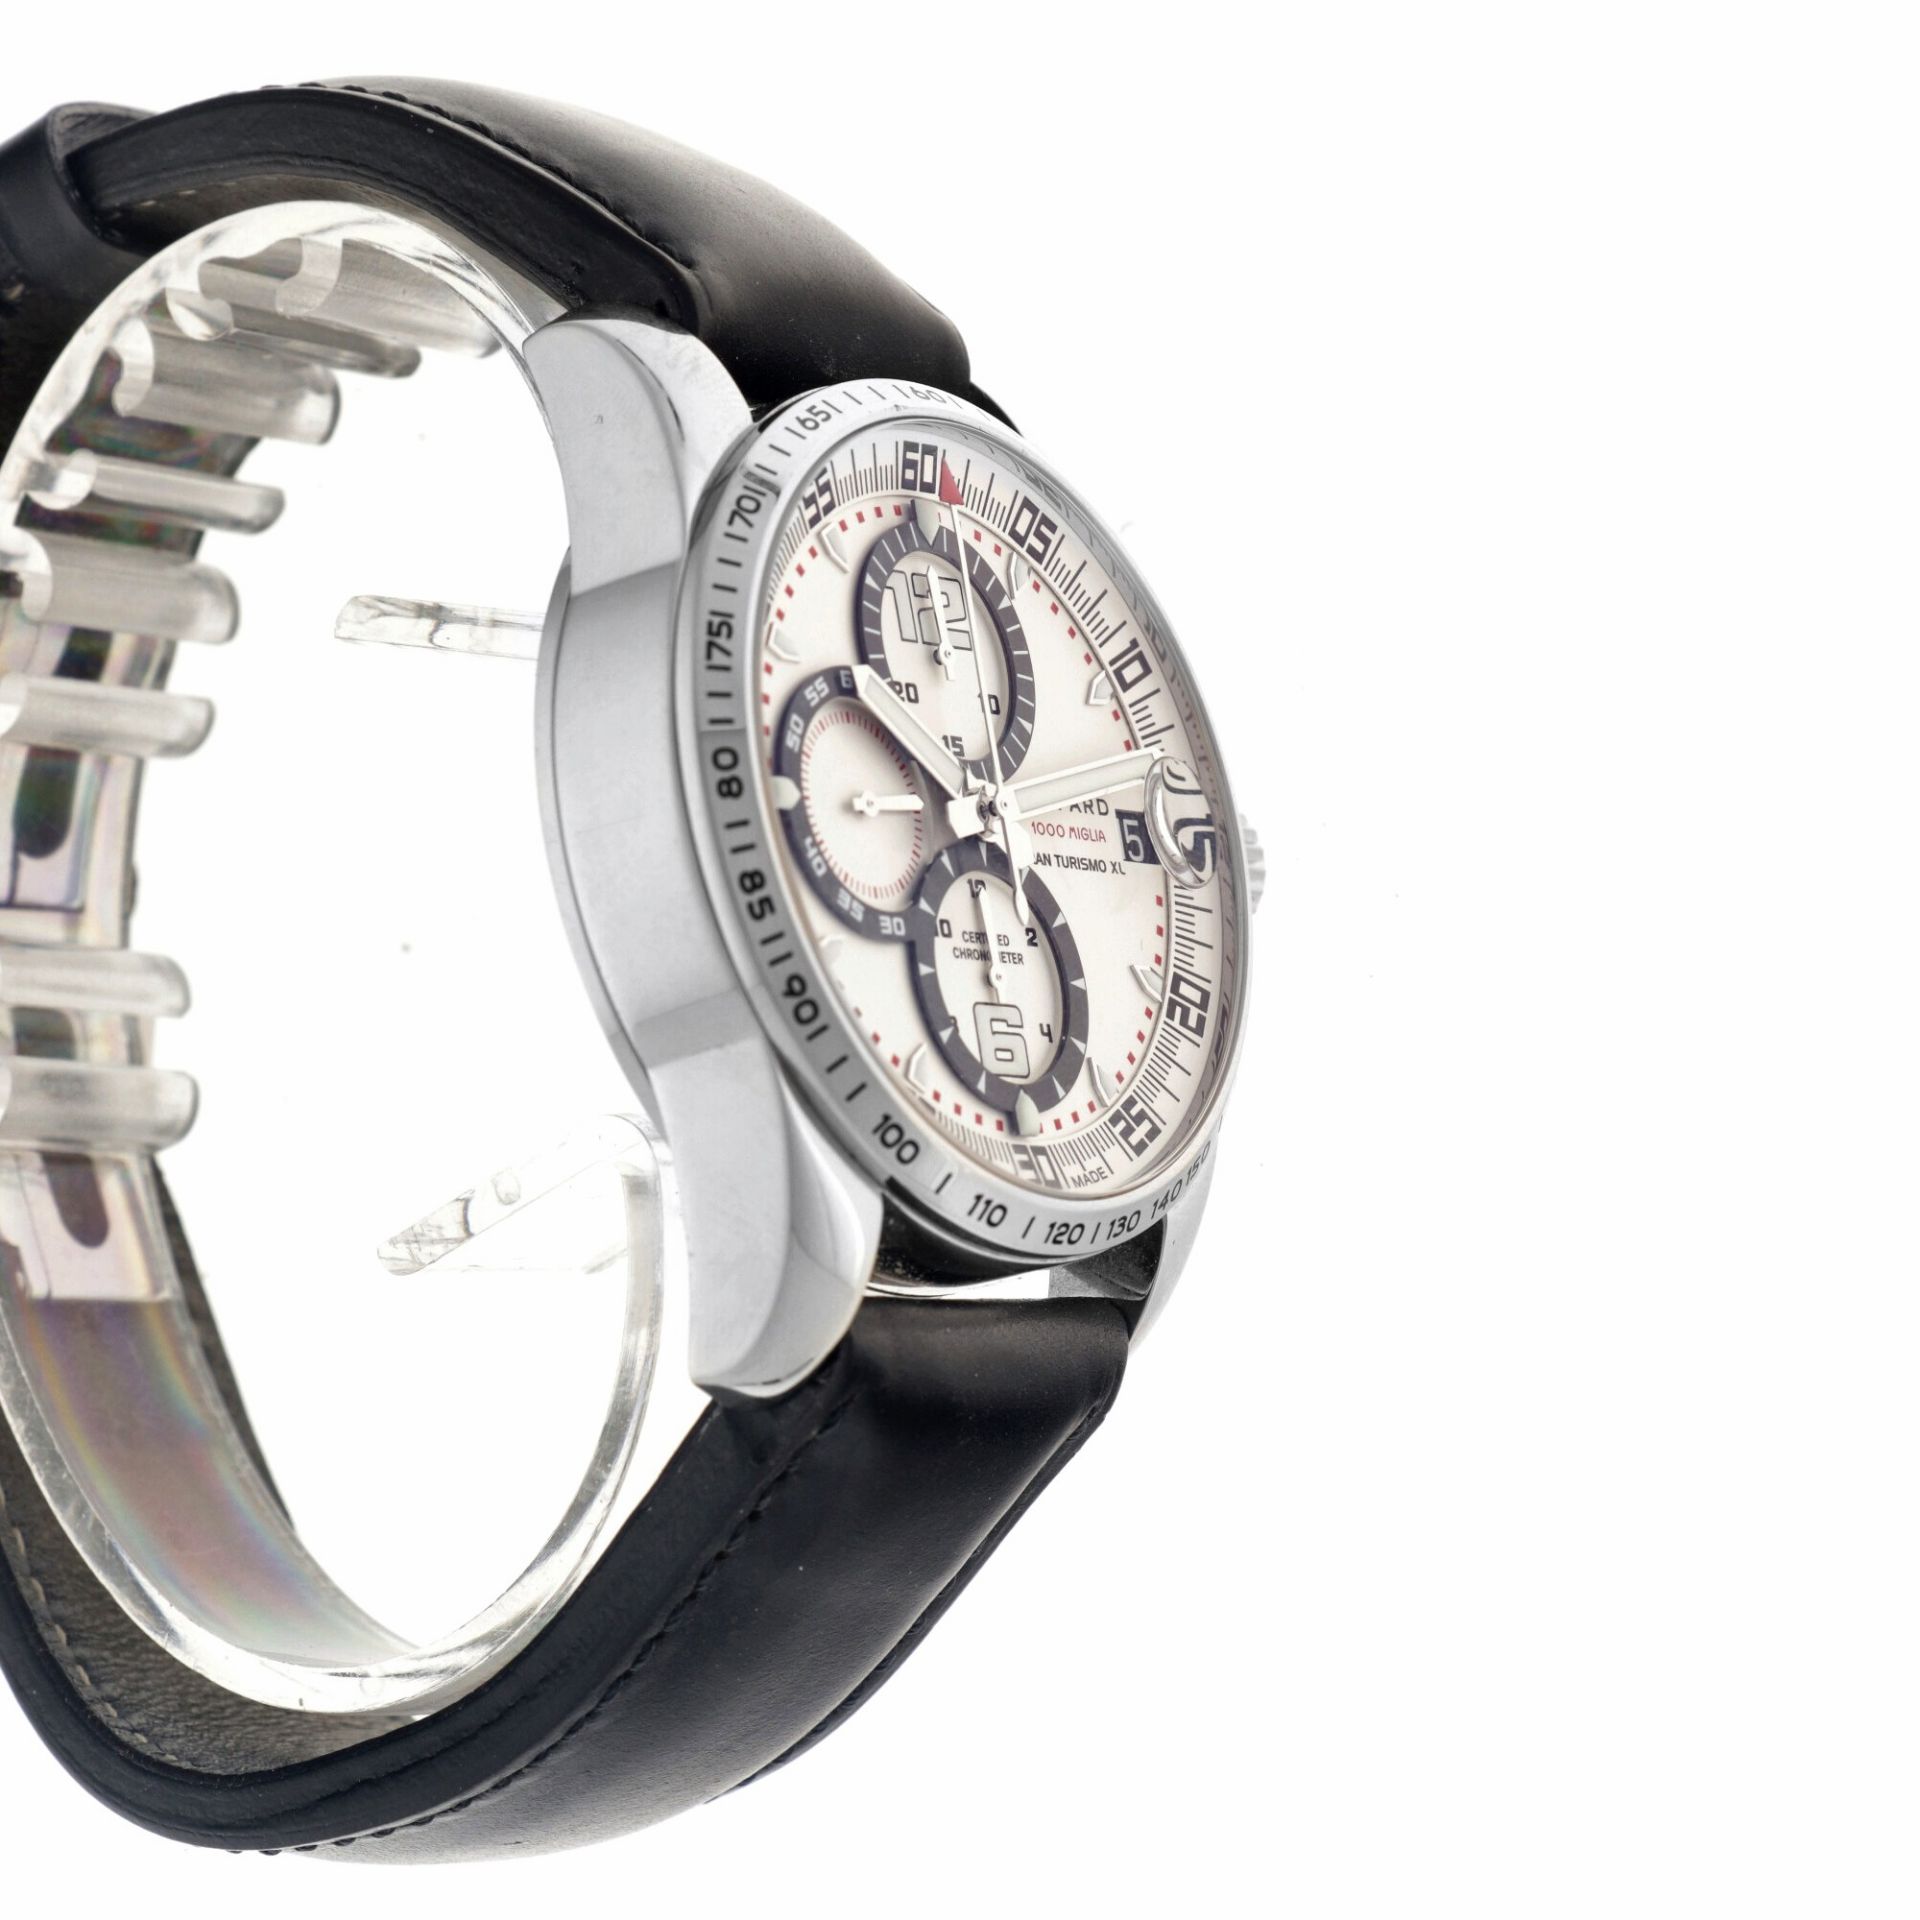 Chopard Mille Miglia Gran Turismo XL 8459 - Men's watch - 2014. - Image 4 of 6